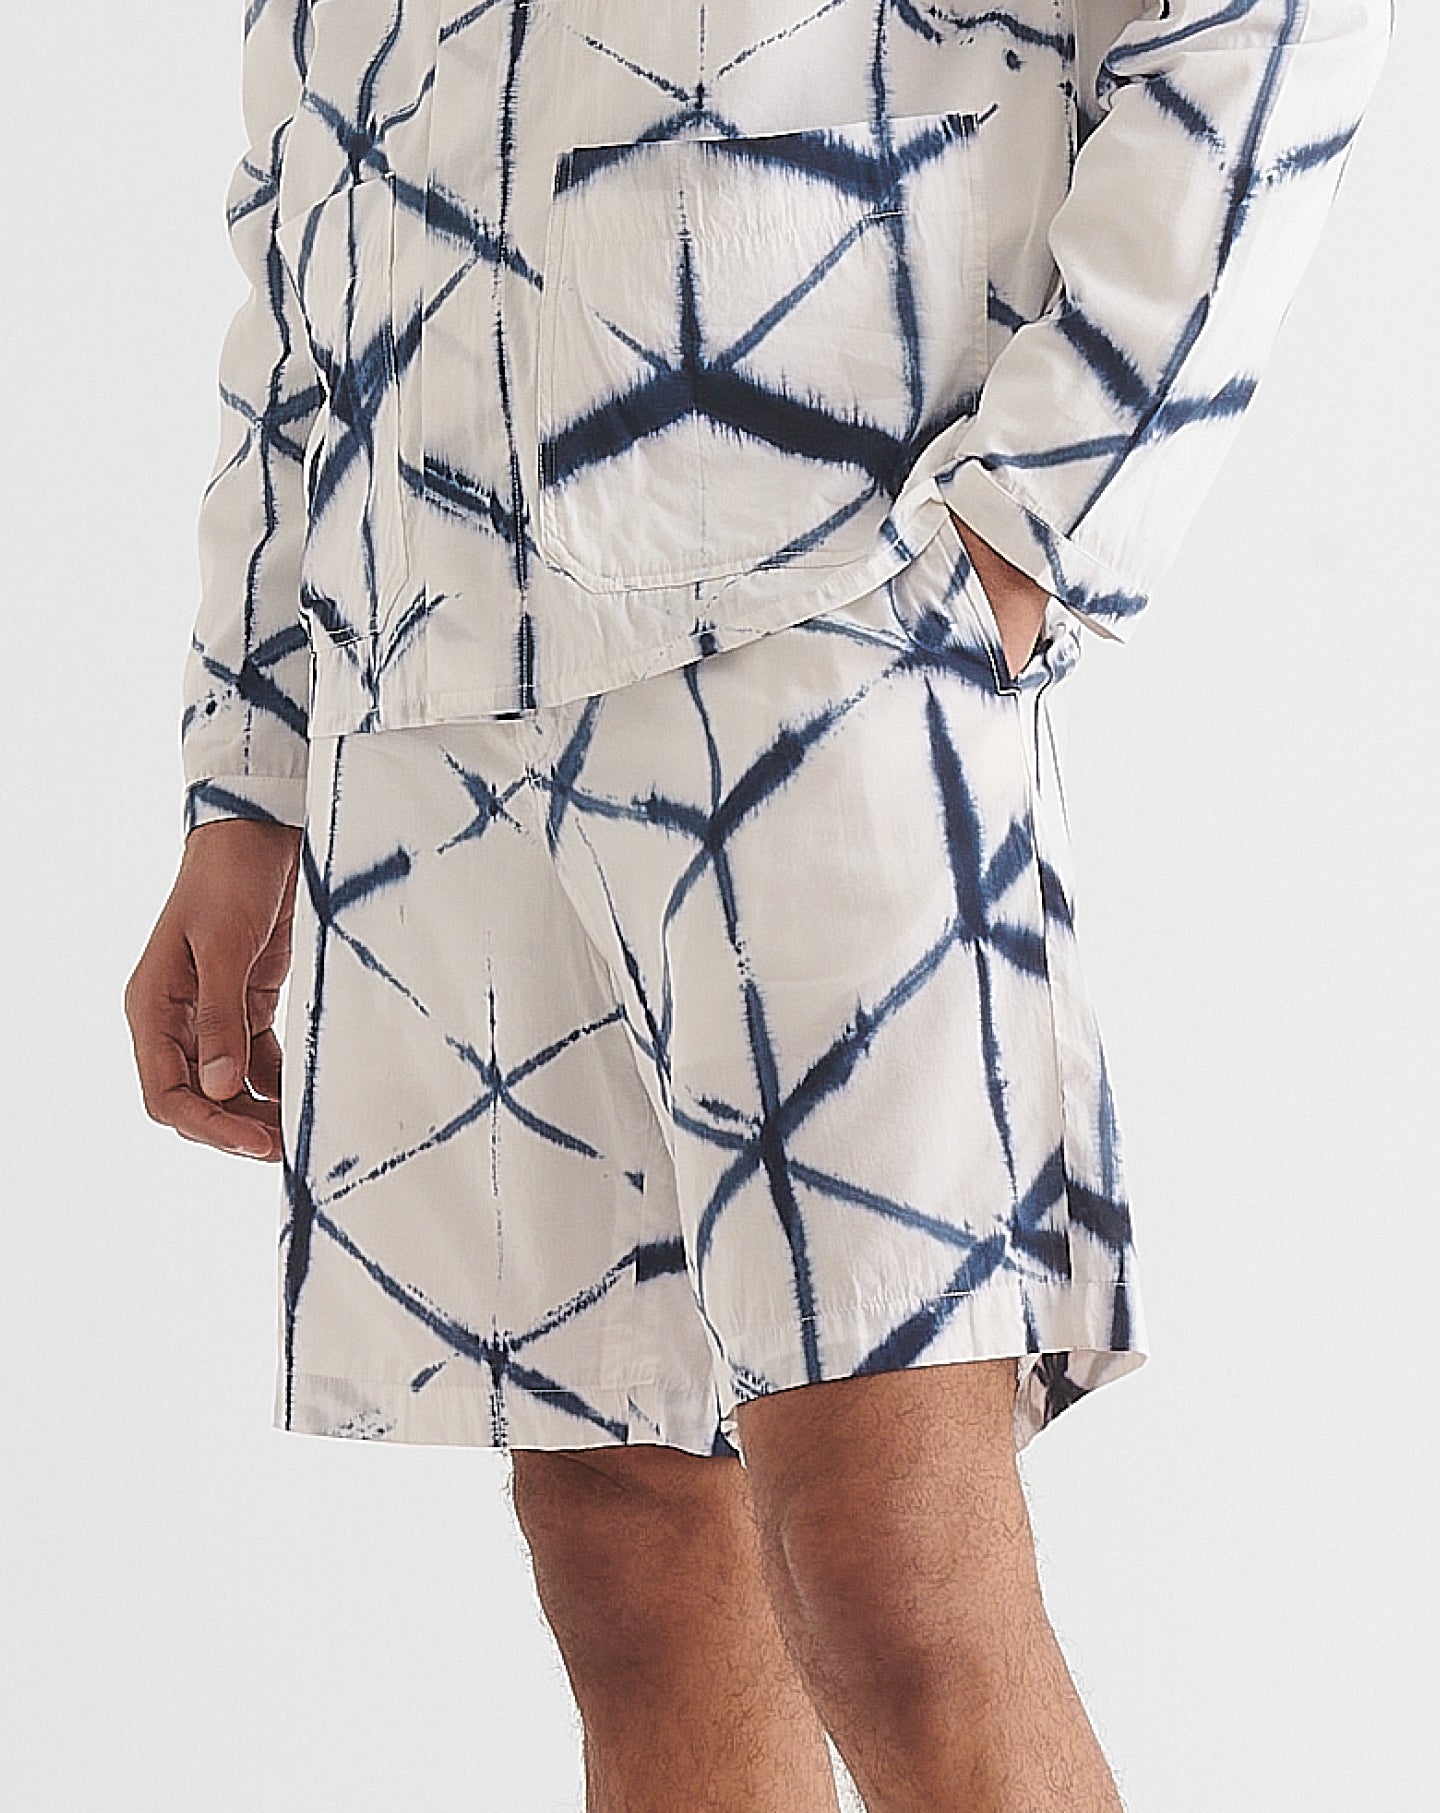 Leeward Shorts in Sapphire and White Tie-Dye